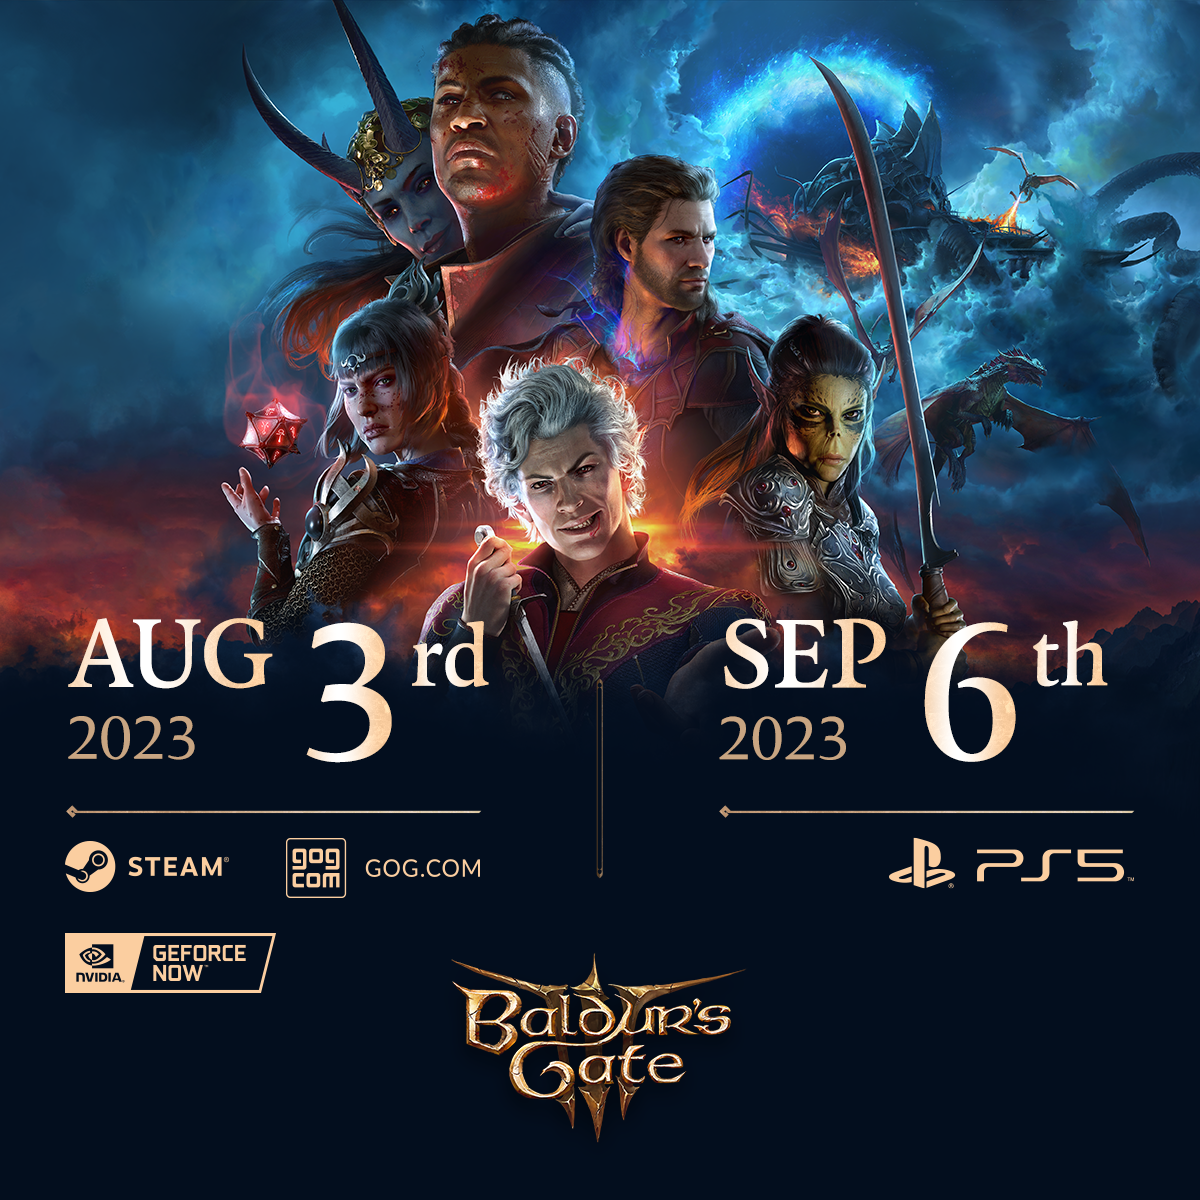 Baldur's Gate 3 dev teases updates on the RPG's Xbox release date